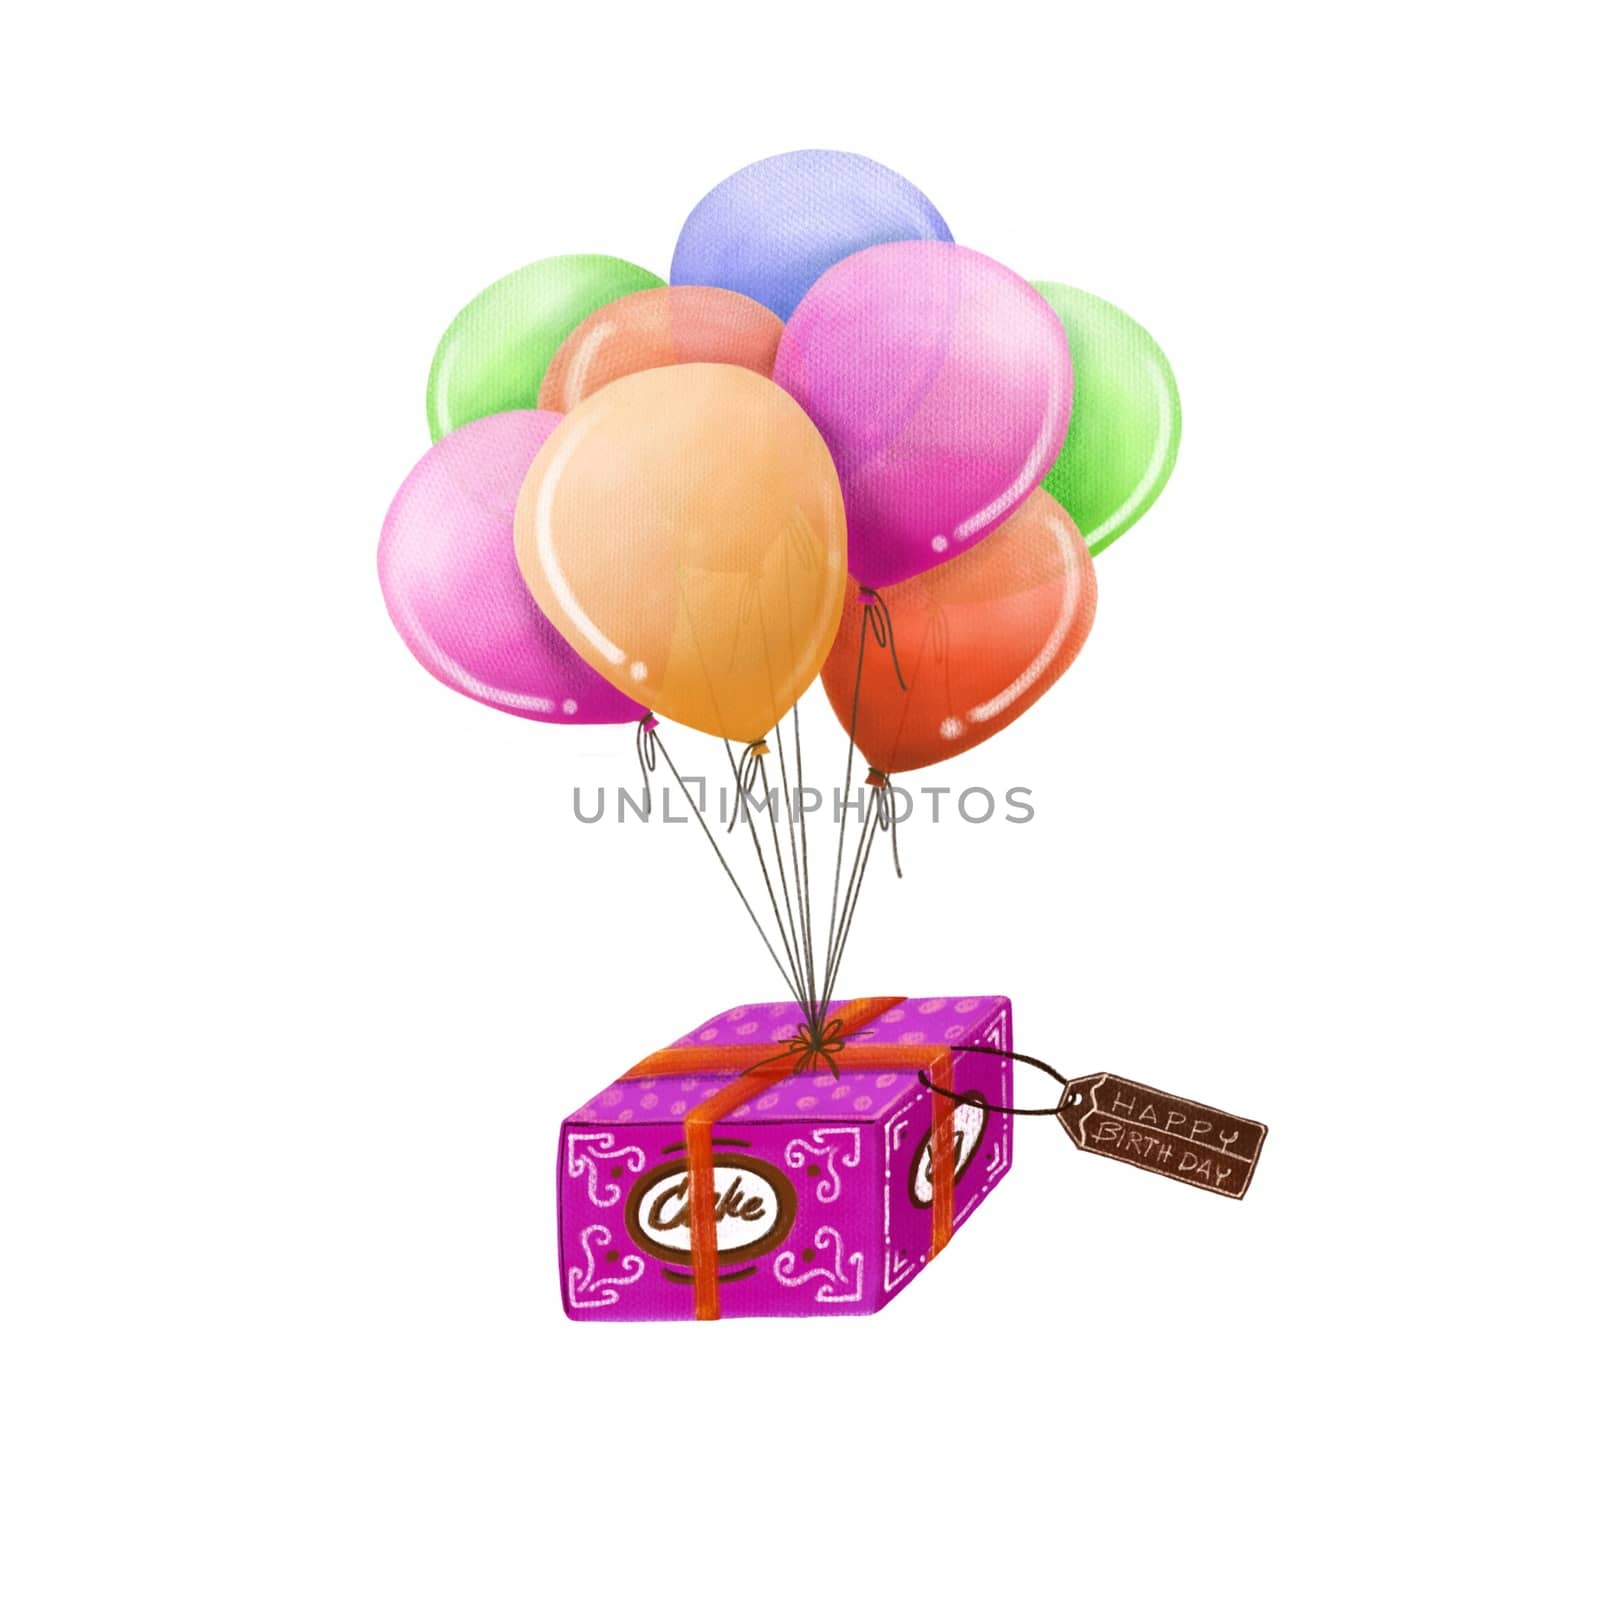 Cake box and balloon, Happy Birthday Conception. by sayhmog